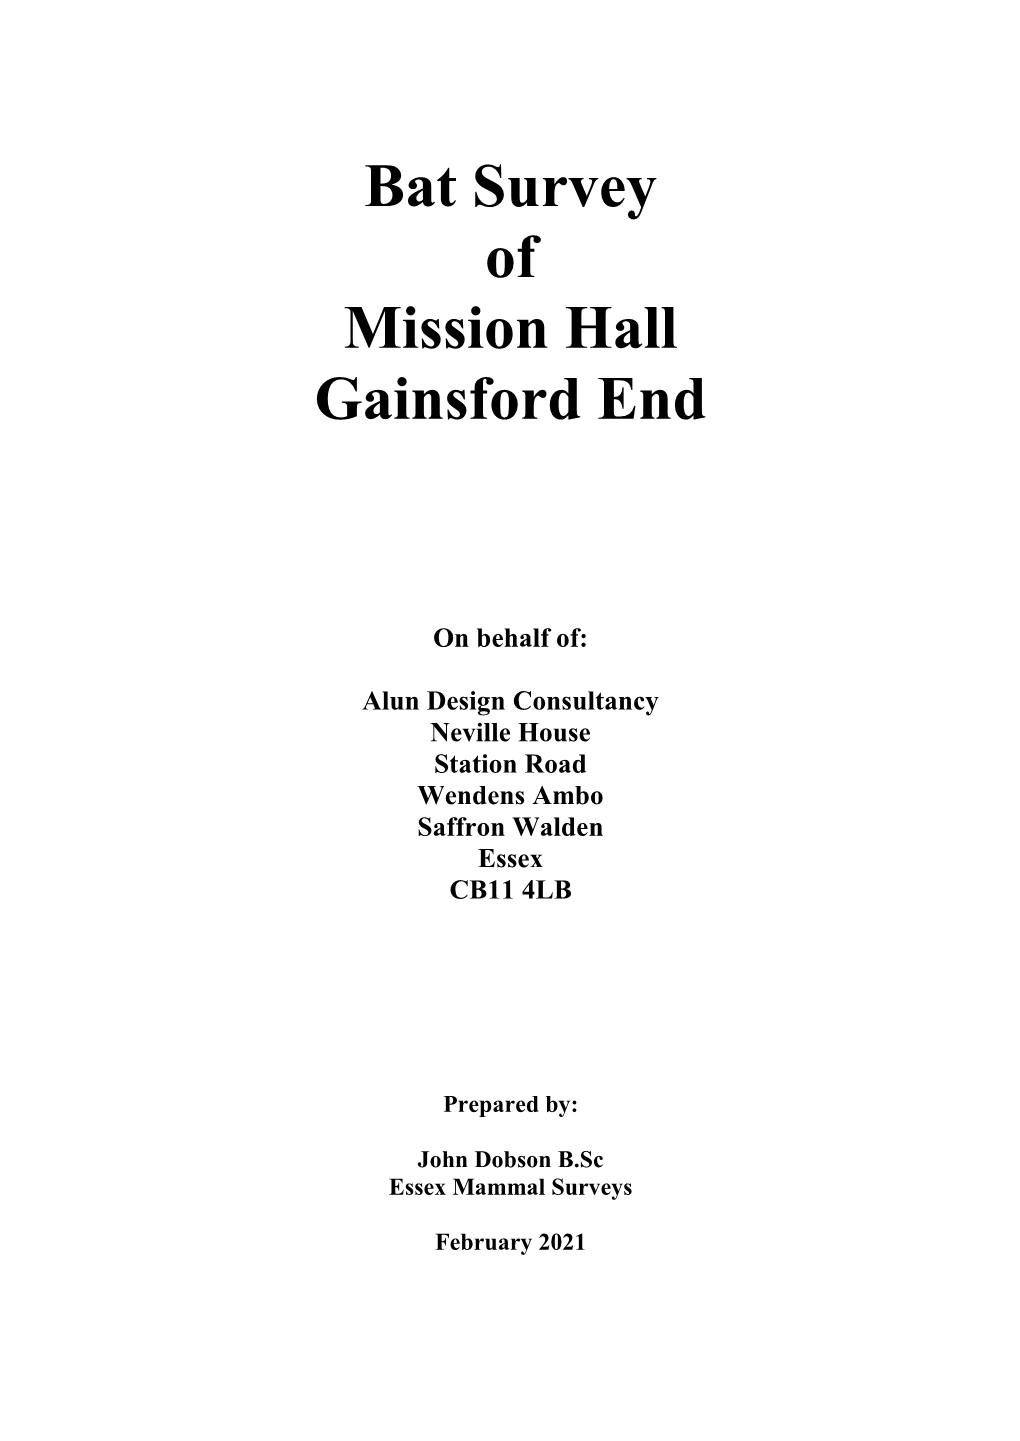 Bat Survey of Mission Hall Gainsford End